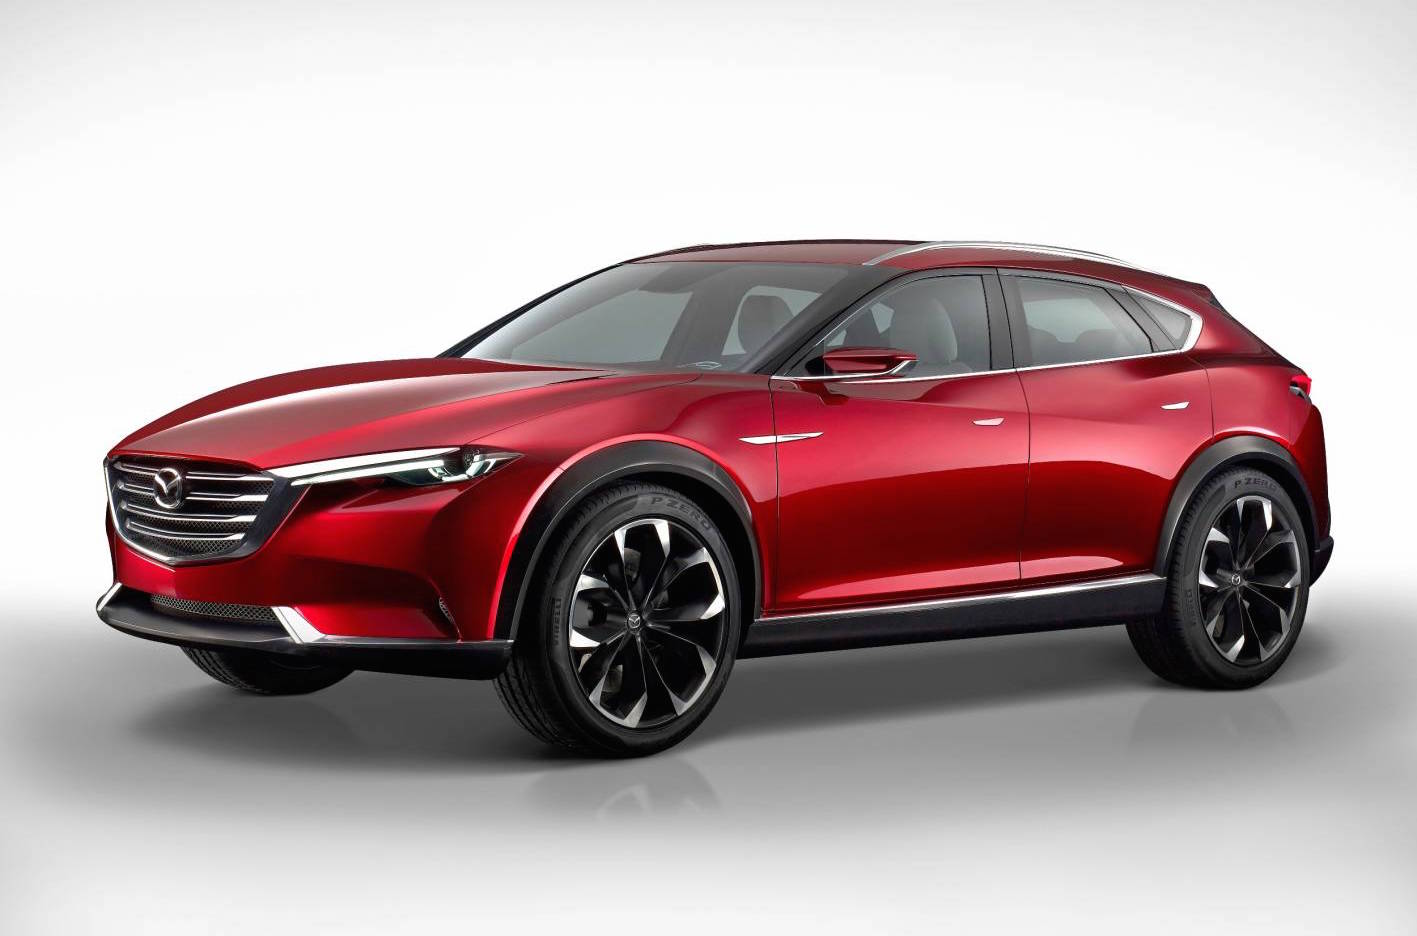 Mazda KOERU concept shows future CX-5, CX-9 design